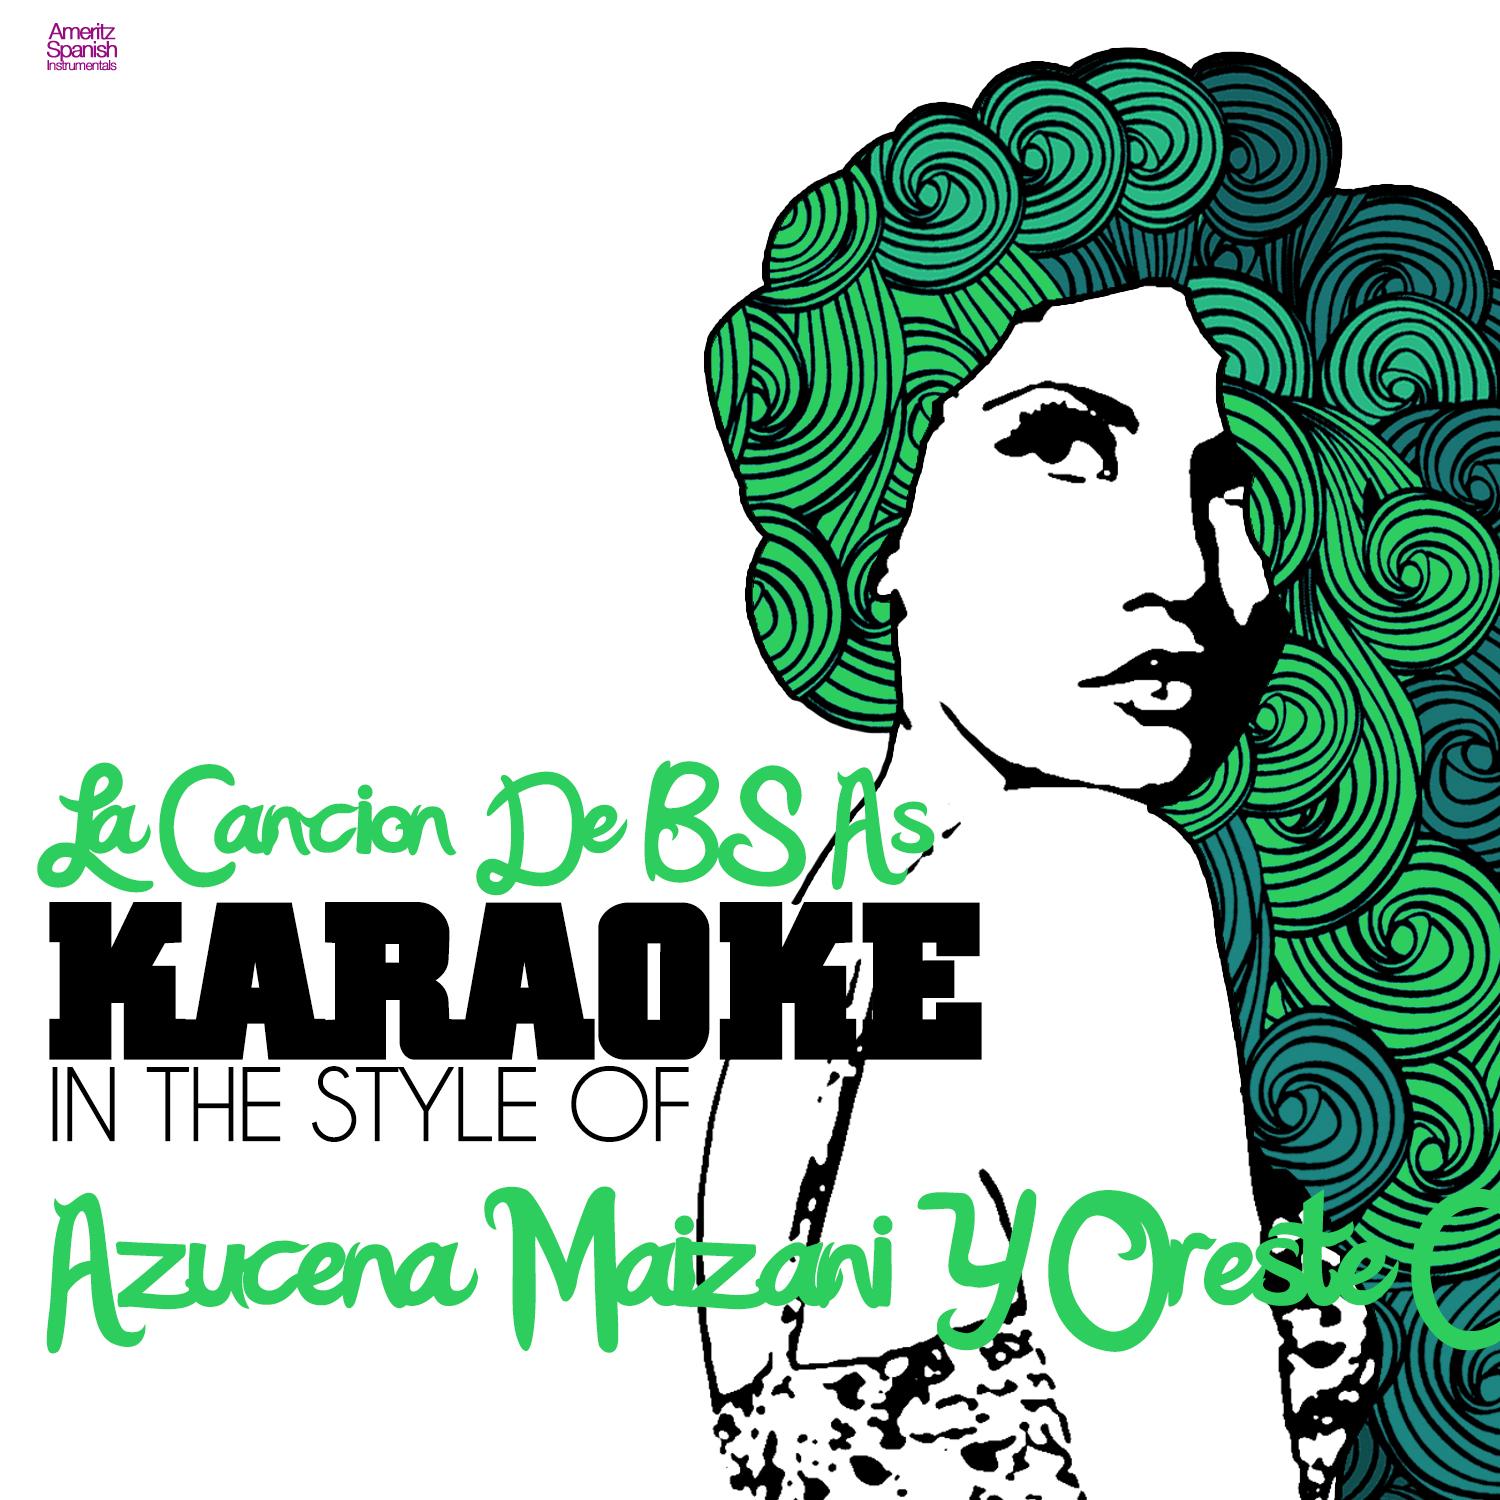 La Cancion De BS As In the Style of Azucena Maizani Y Oreste Cu faro Karaoke Version  Single